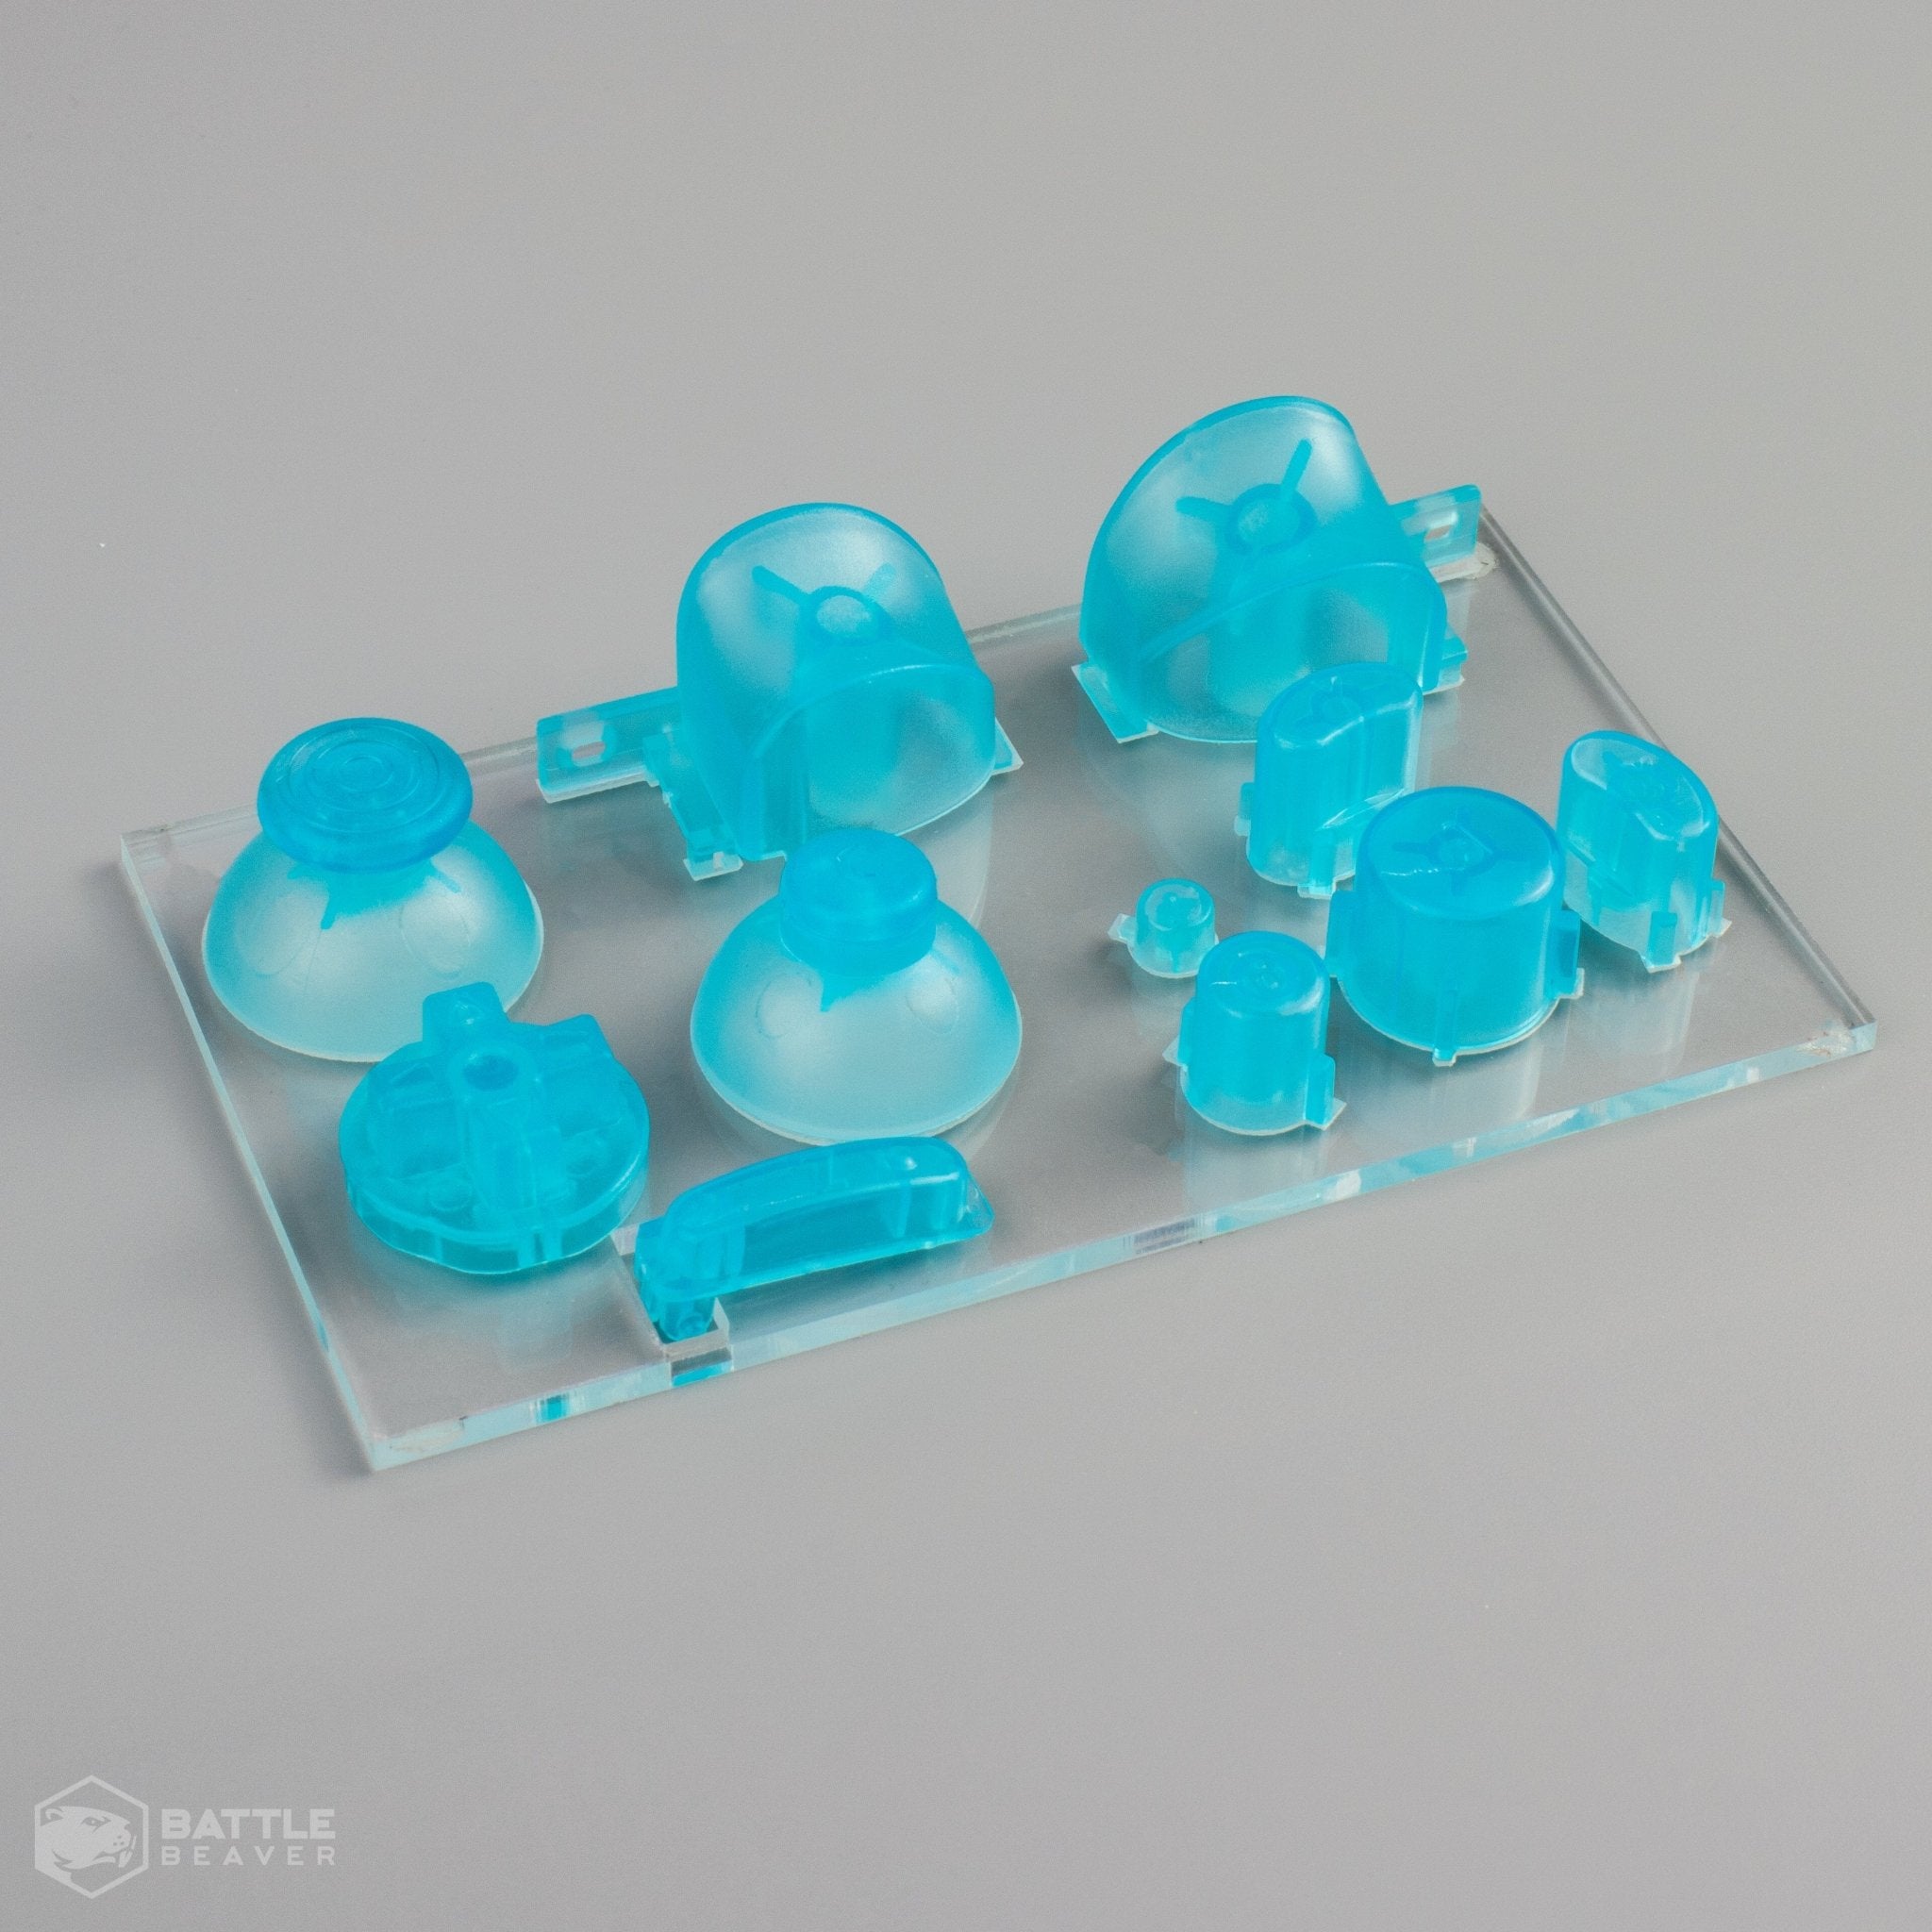 3rd Party Gamecube Parts Kit - Battle Beaver Customs - Crystal Light Blue